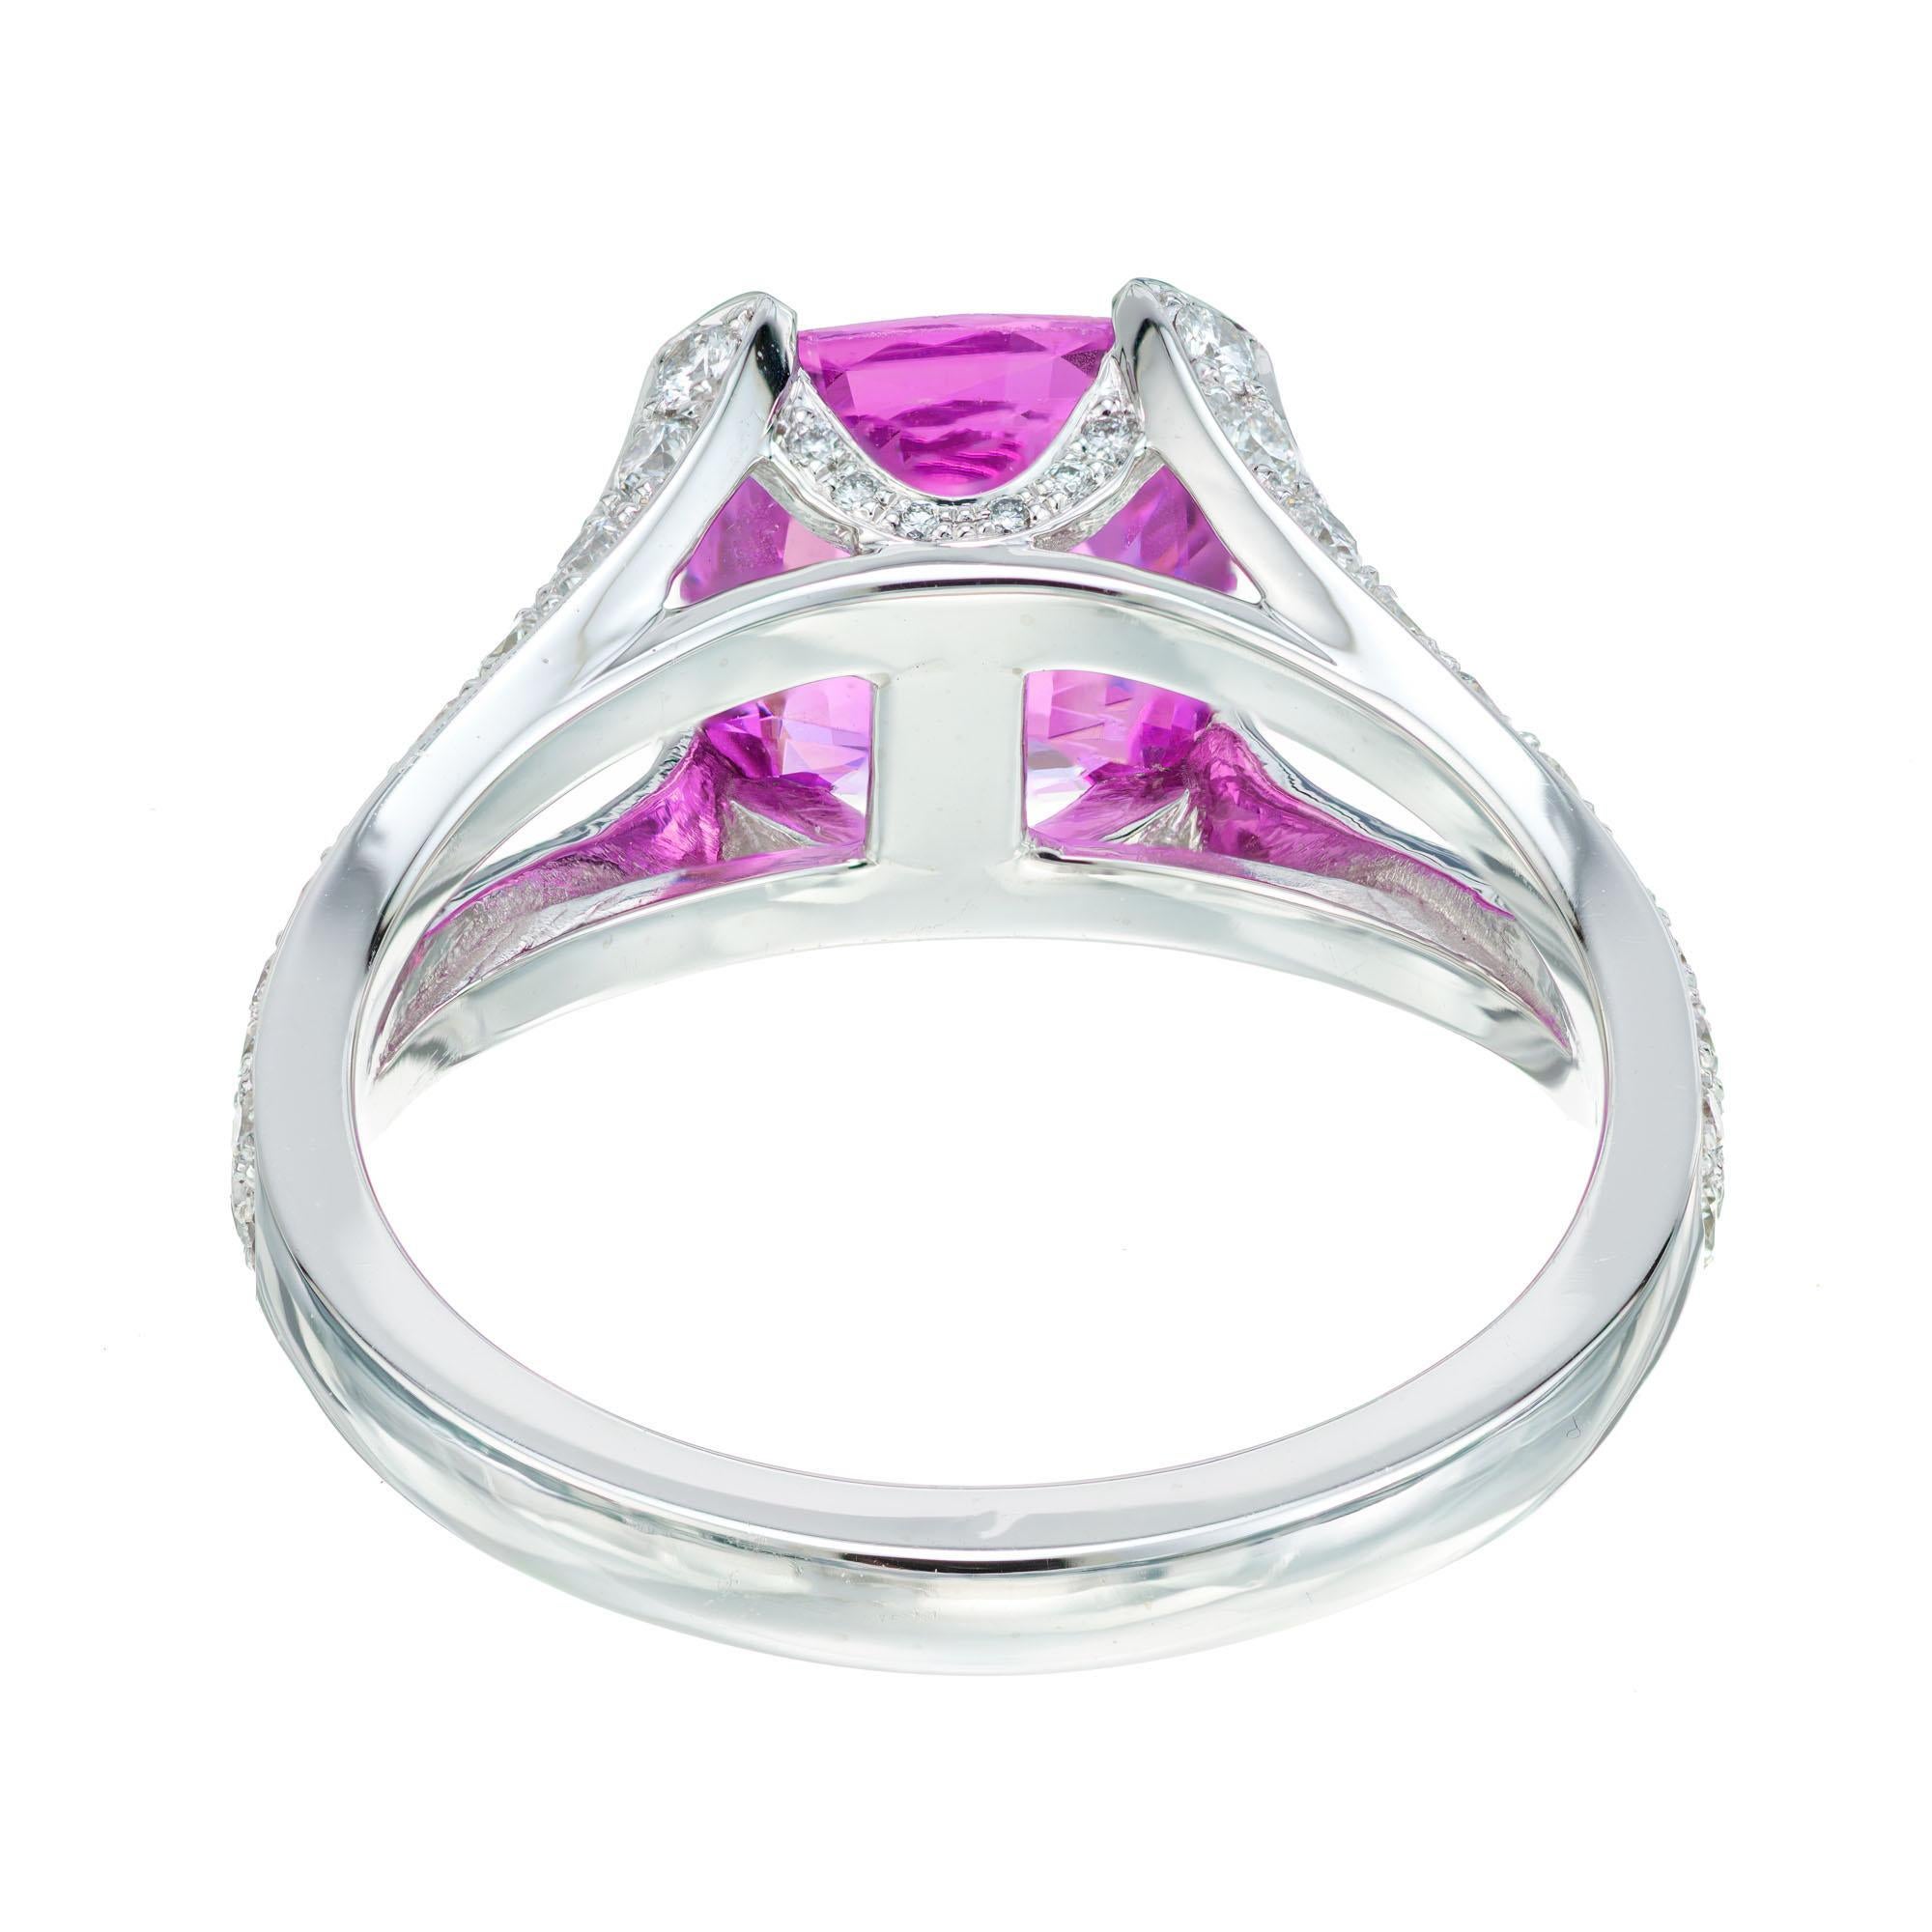 Peter Suchy GIA 2.76 Carat Cushion Cut Sapphire Diamond Platinum Engagement Ring For Sale 2